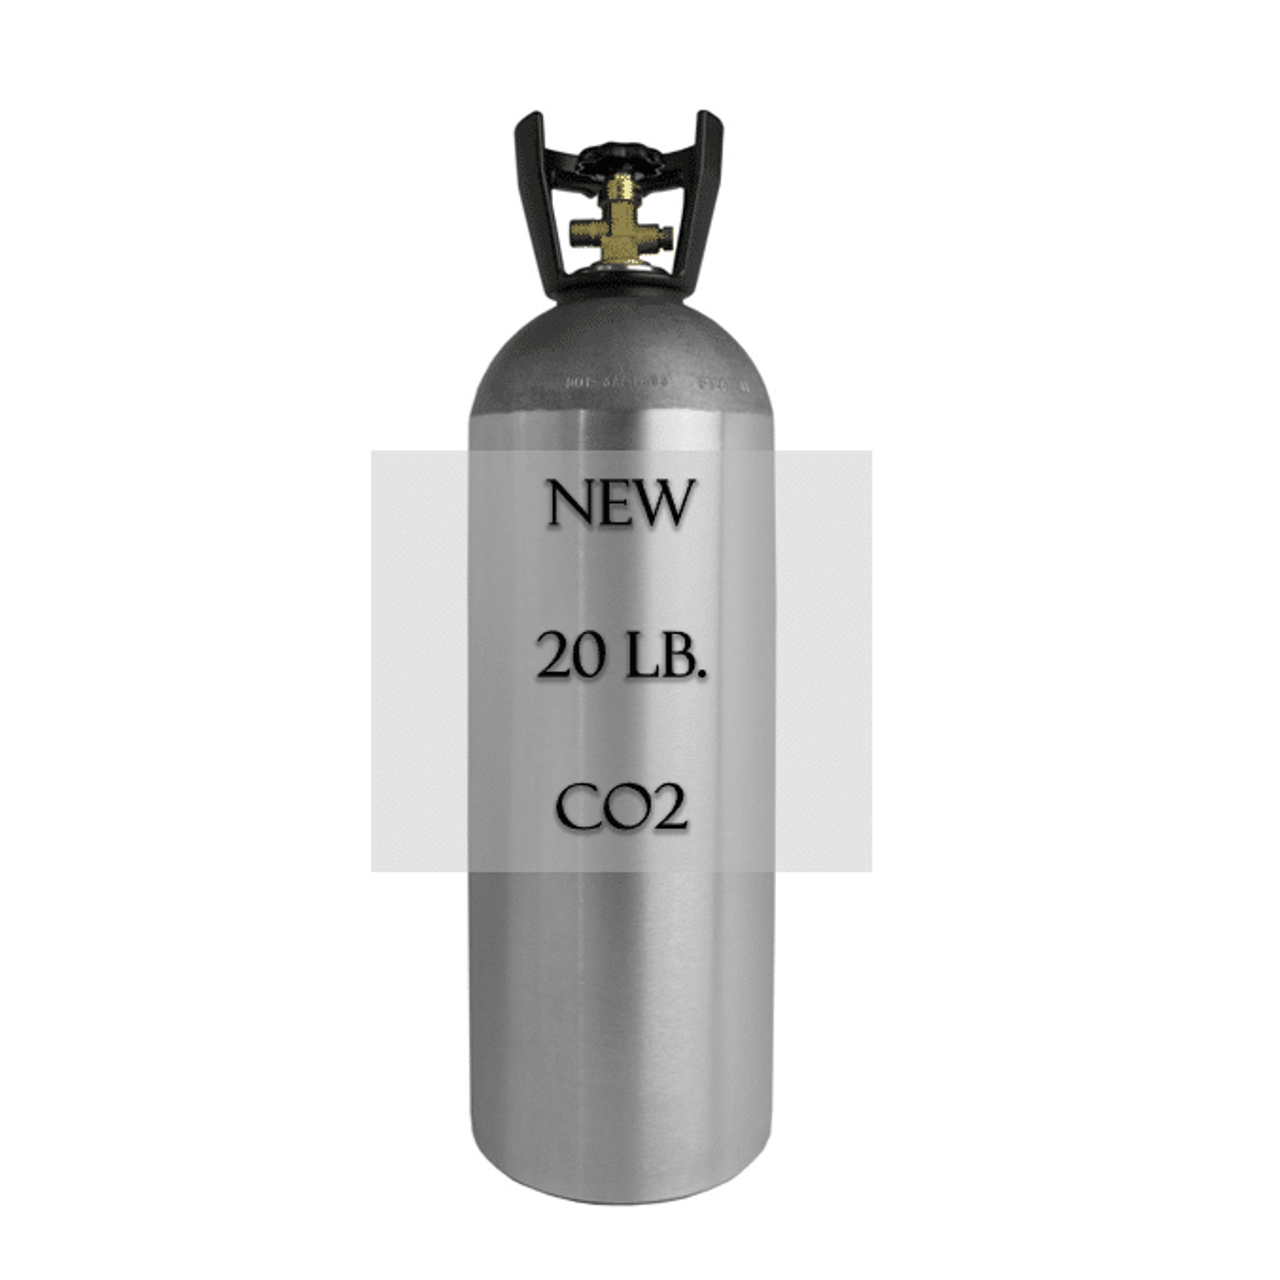 CO2 - 20 Lb. - New - KegForce